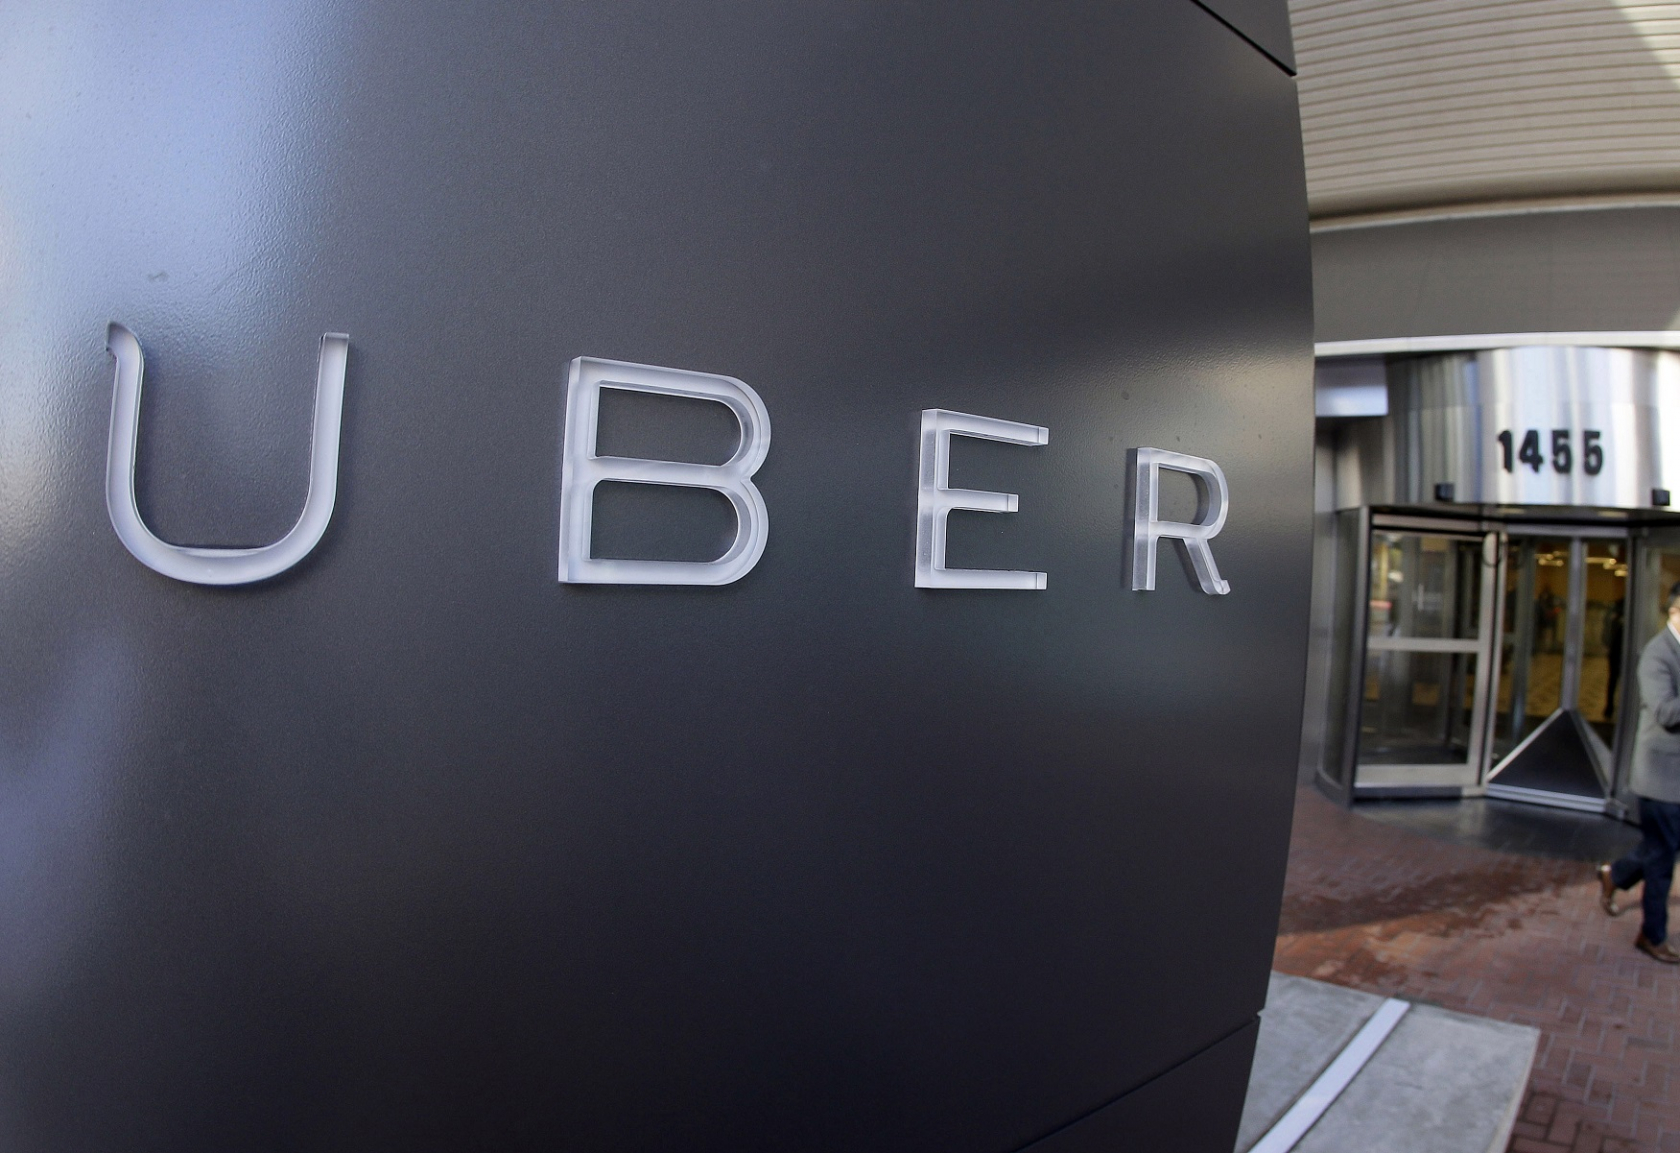 Despite its recent scandals, Uber keeps on growing